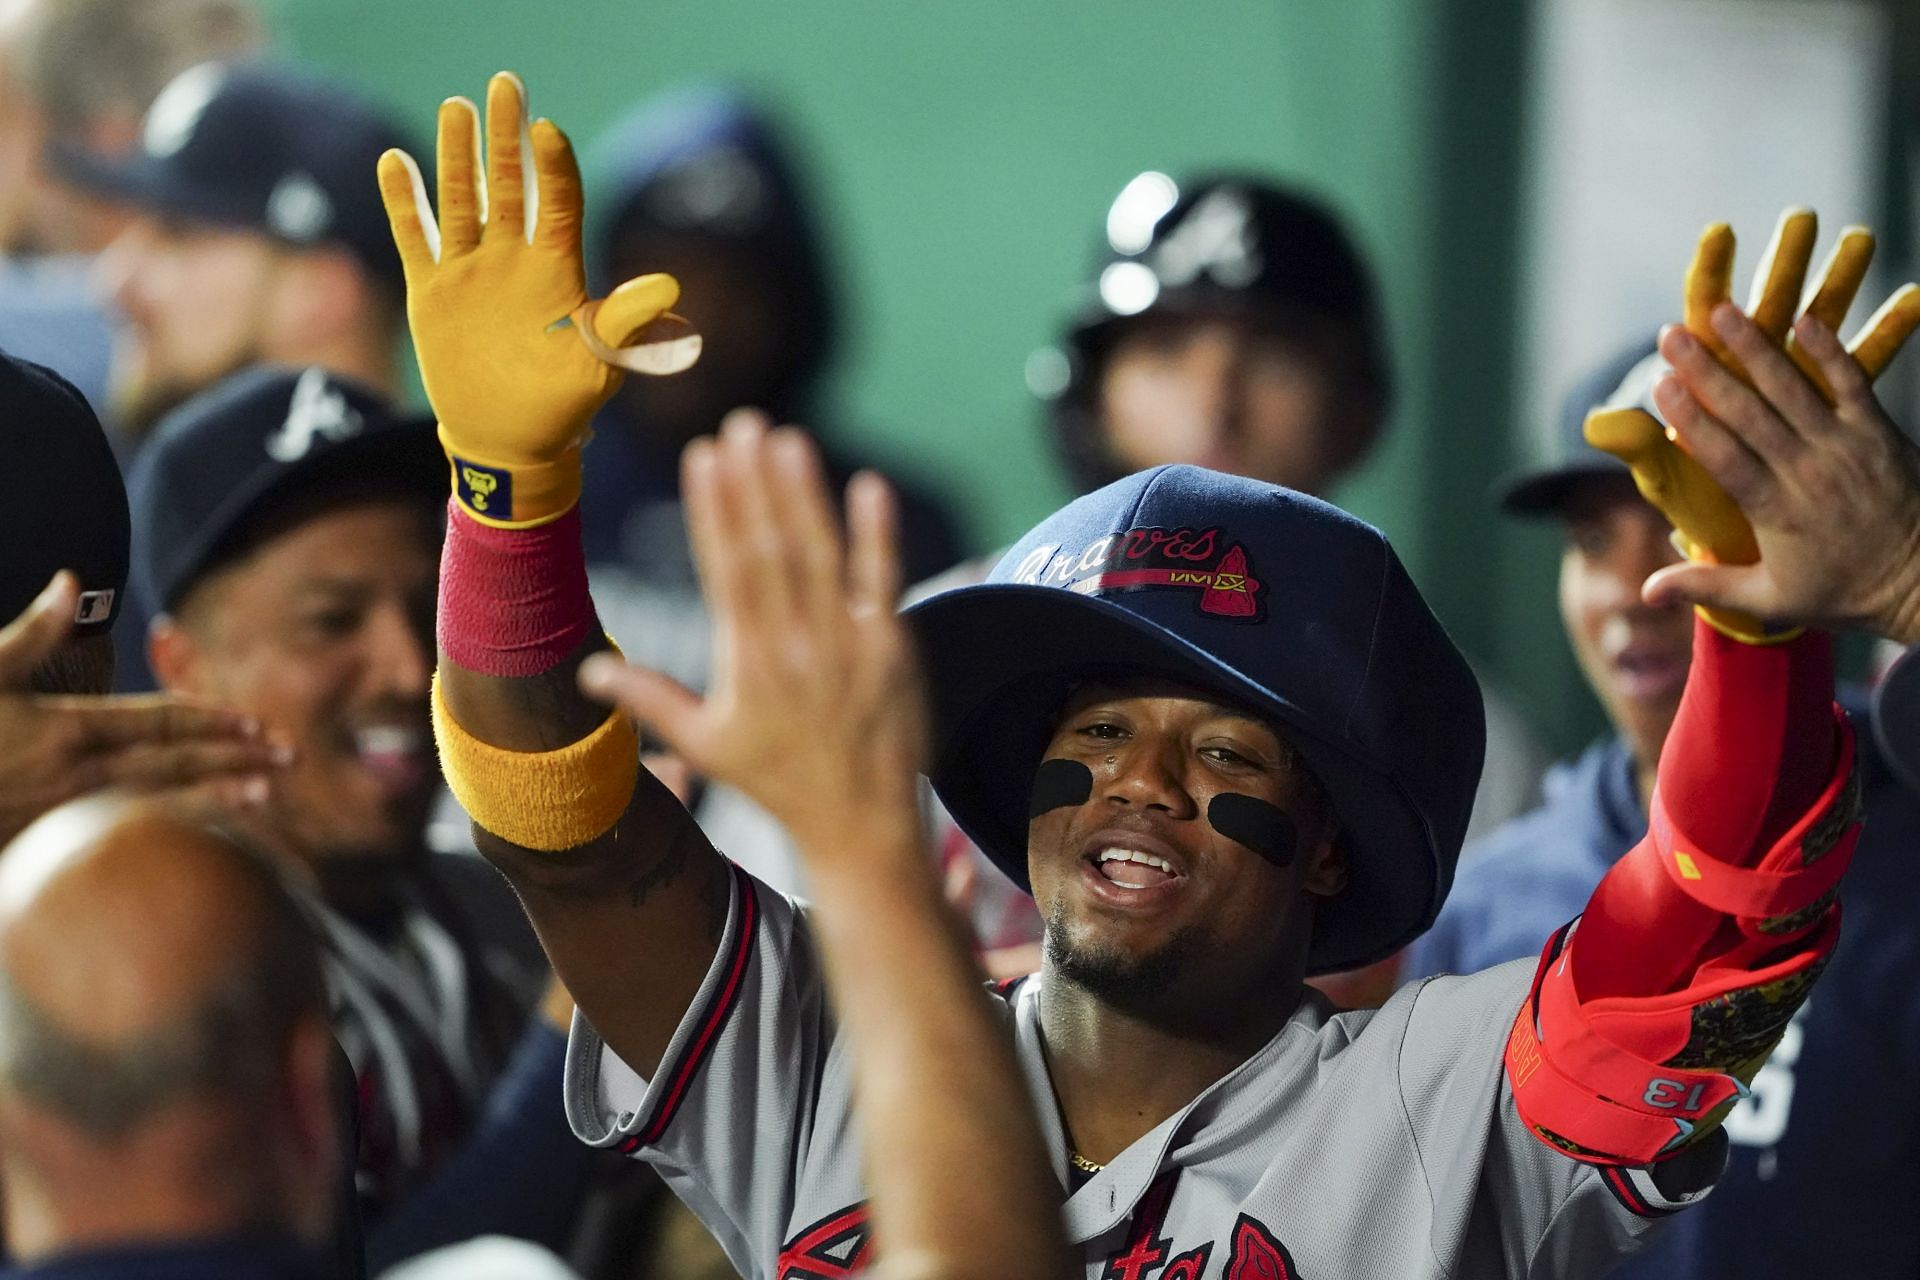 Braves bring back 'screaming savage' logo on batting practice hats